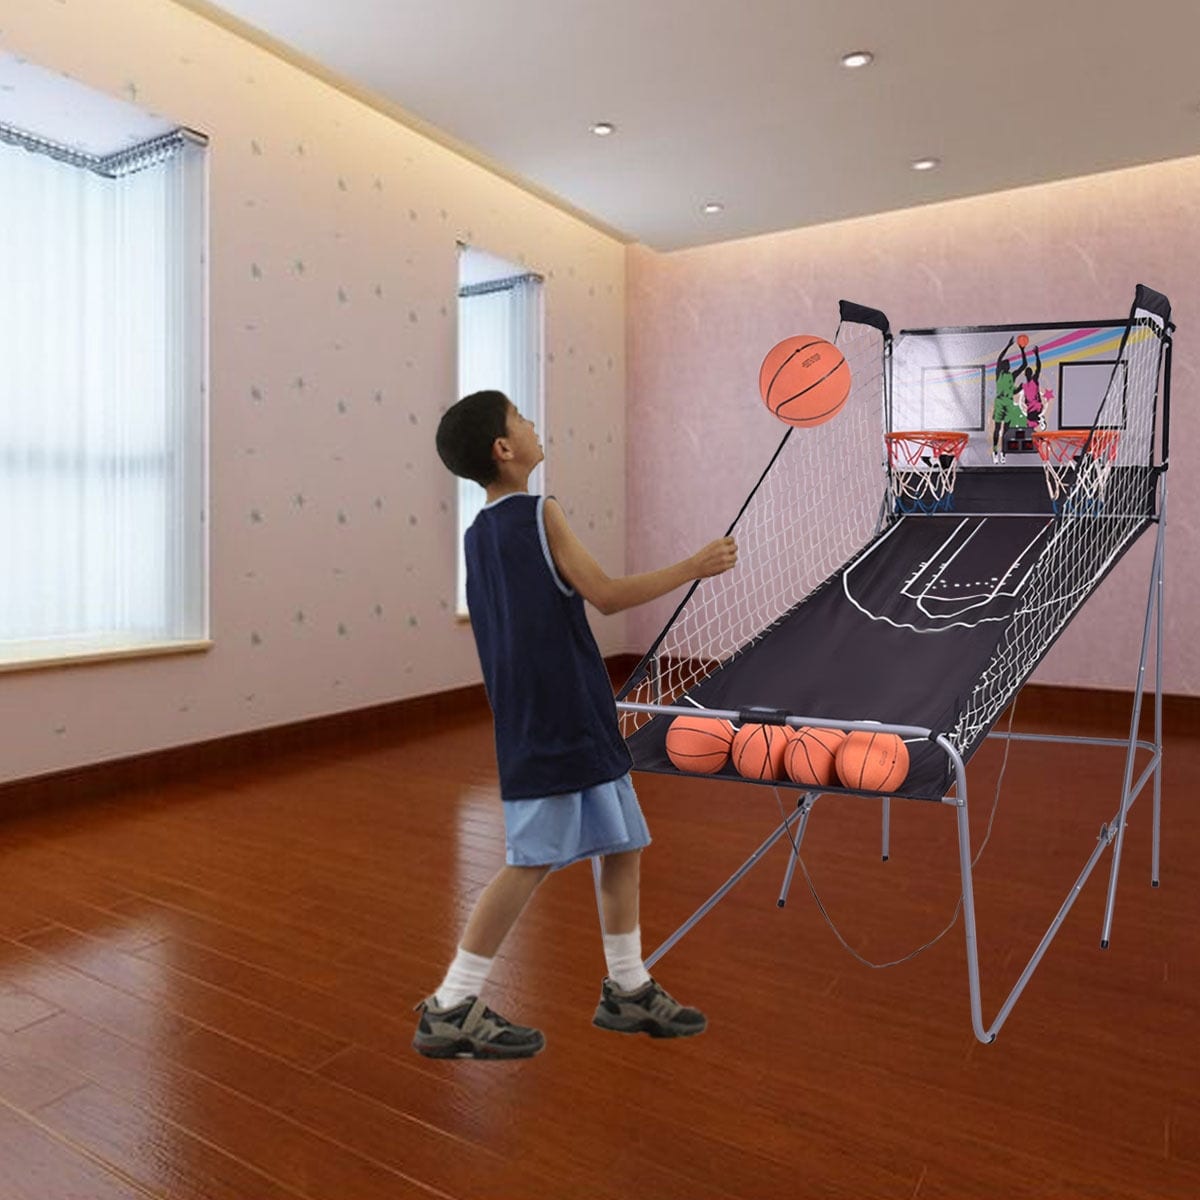 basketball arcade machine electronic